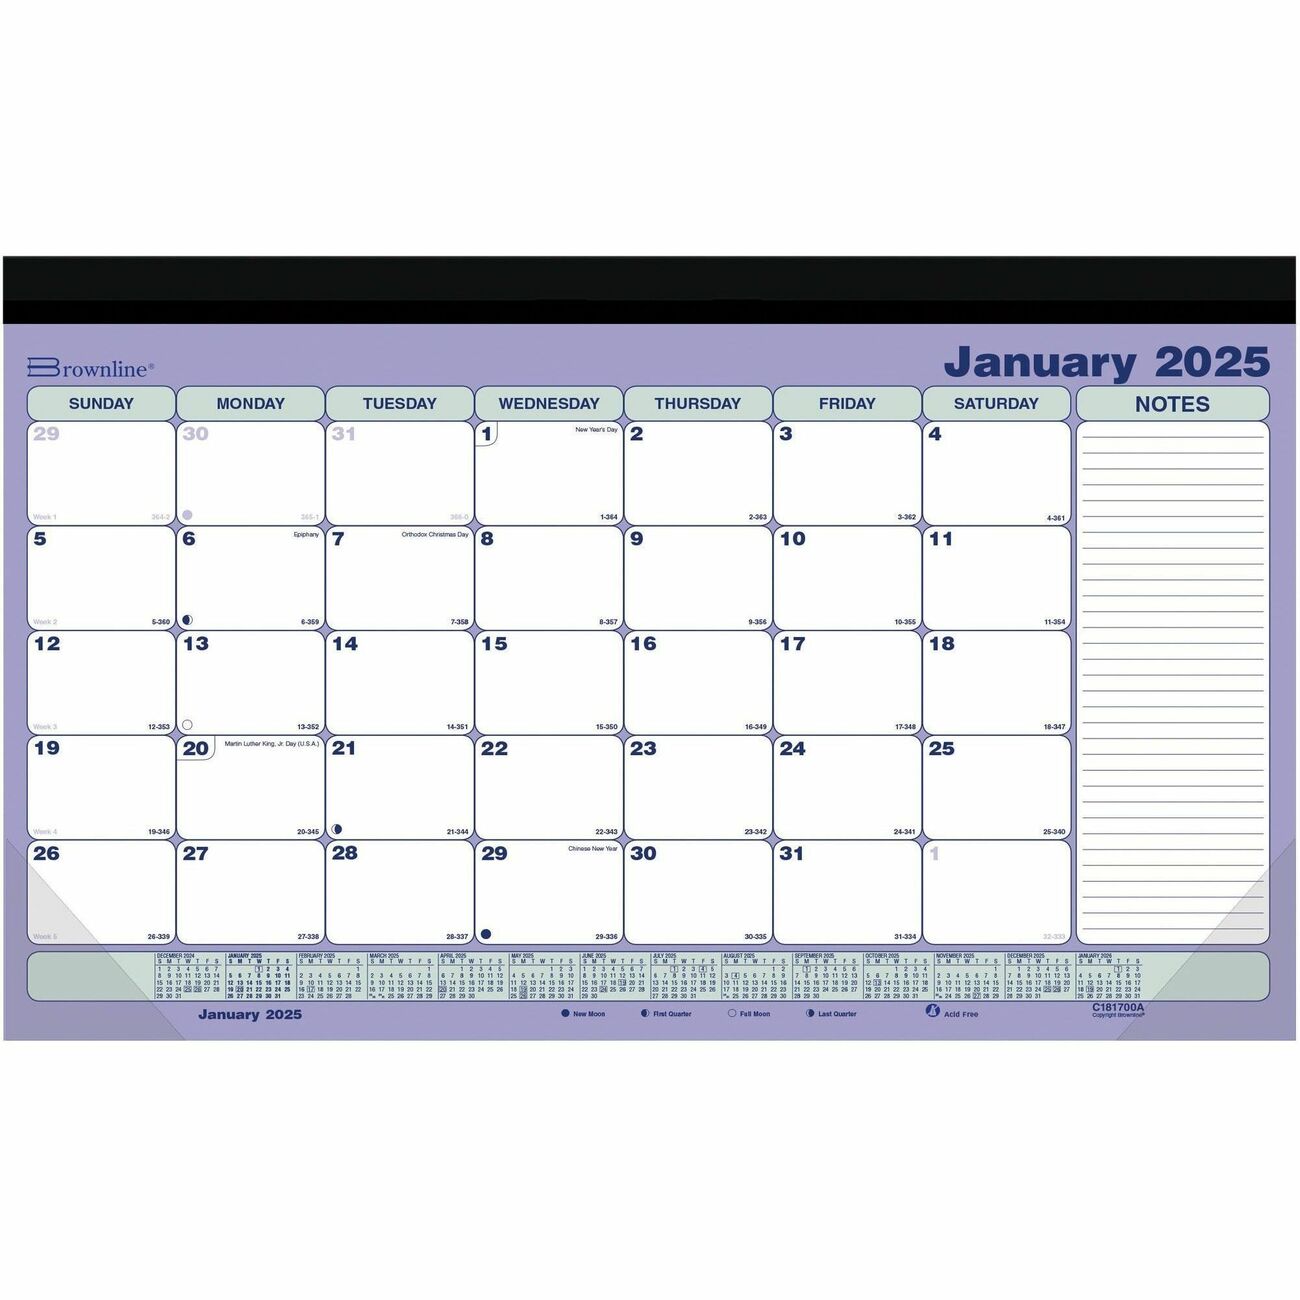 Brownline Calendar Five Star Office Supply